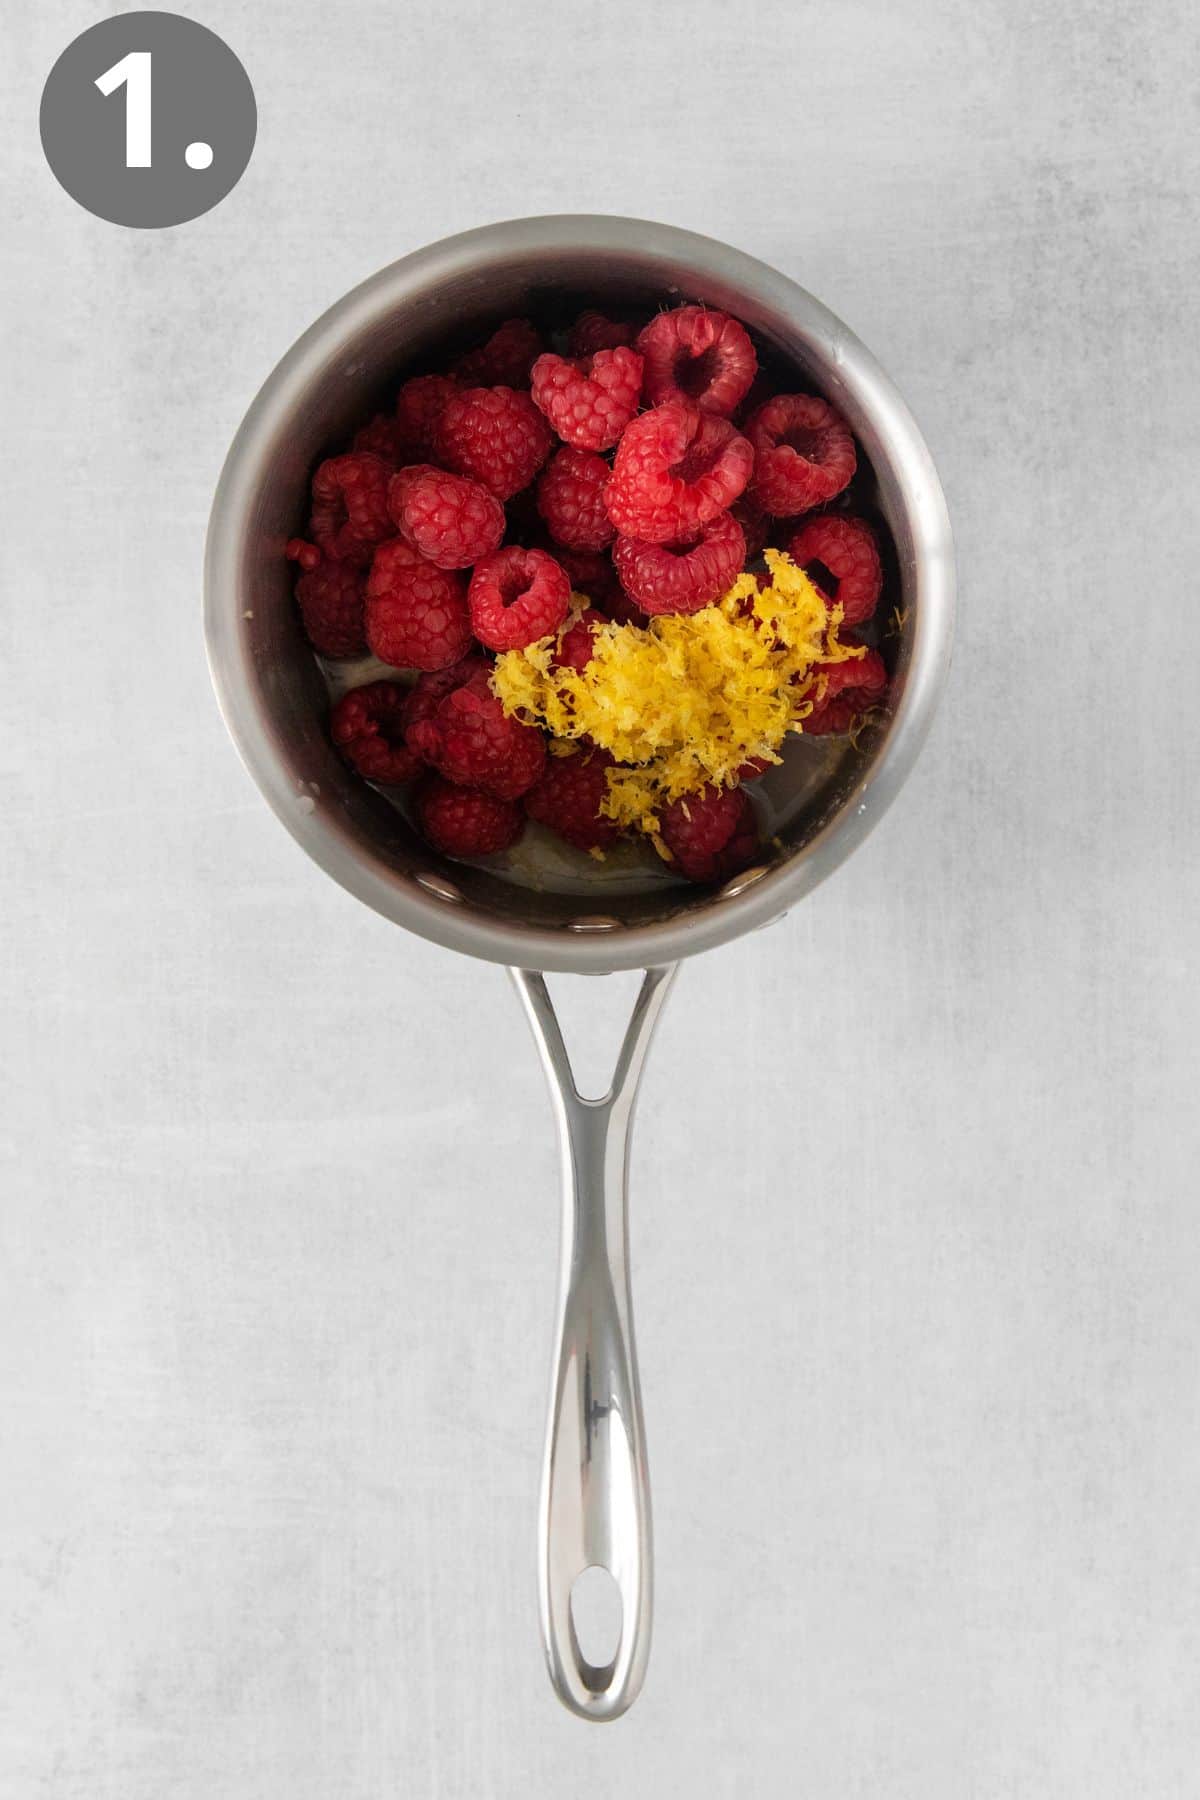 Raspberries, sugar, and lemon zest in a sauce pan